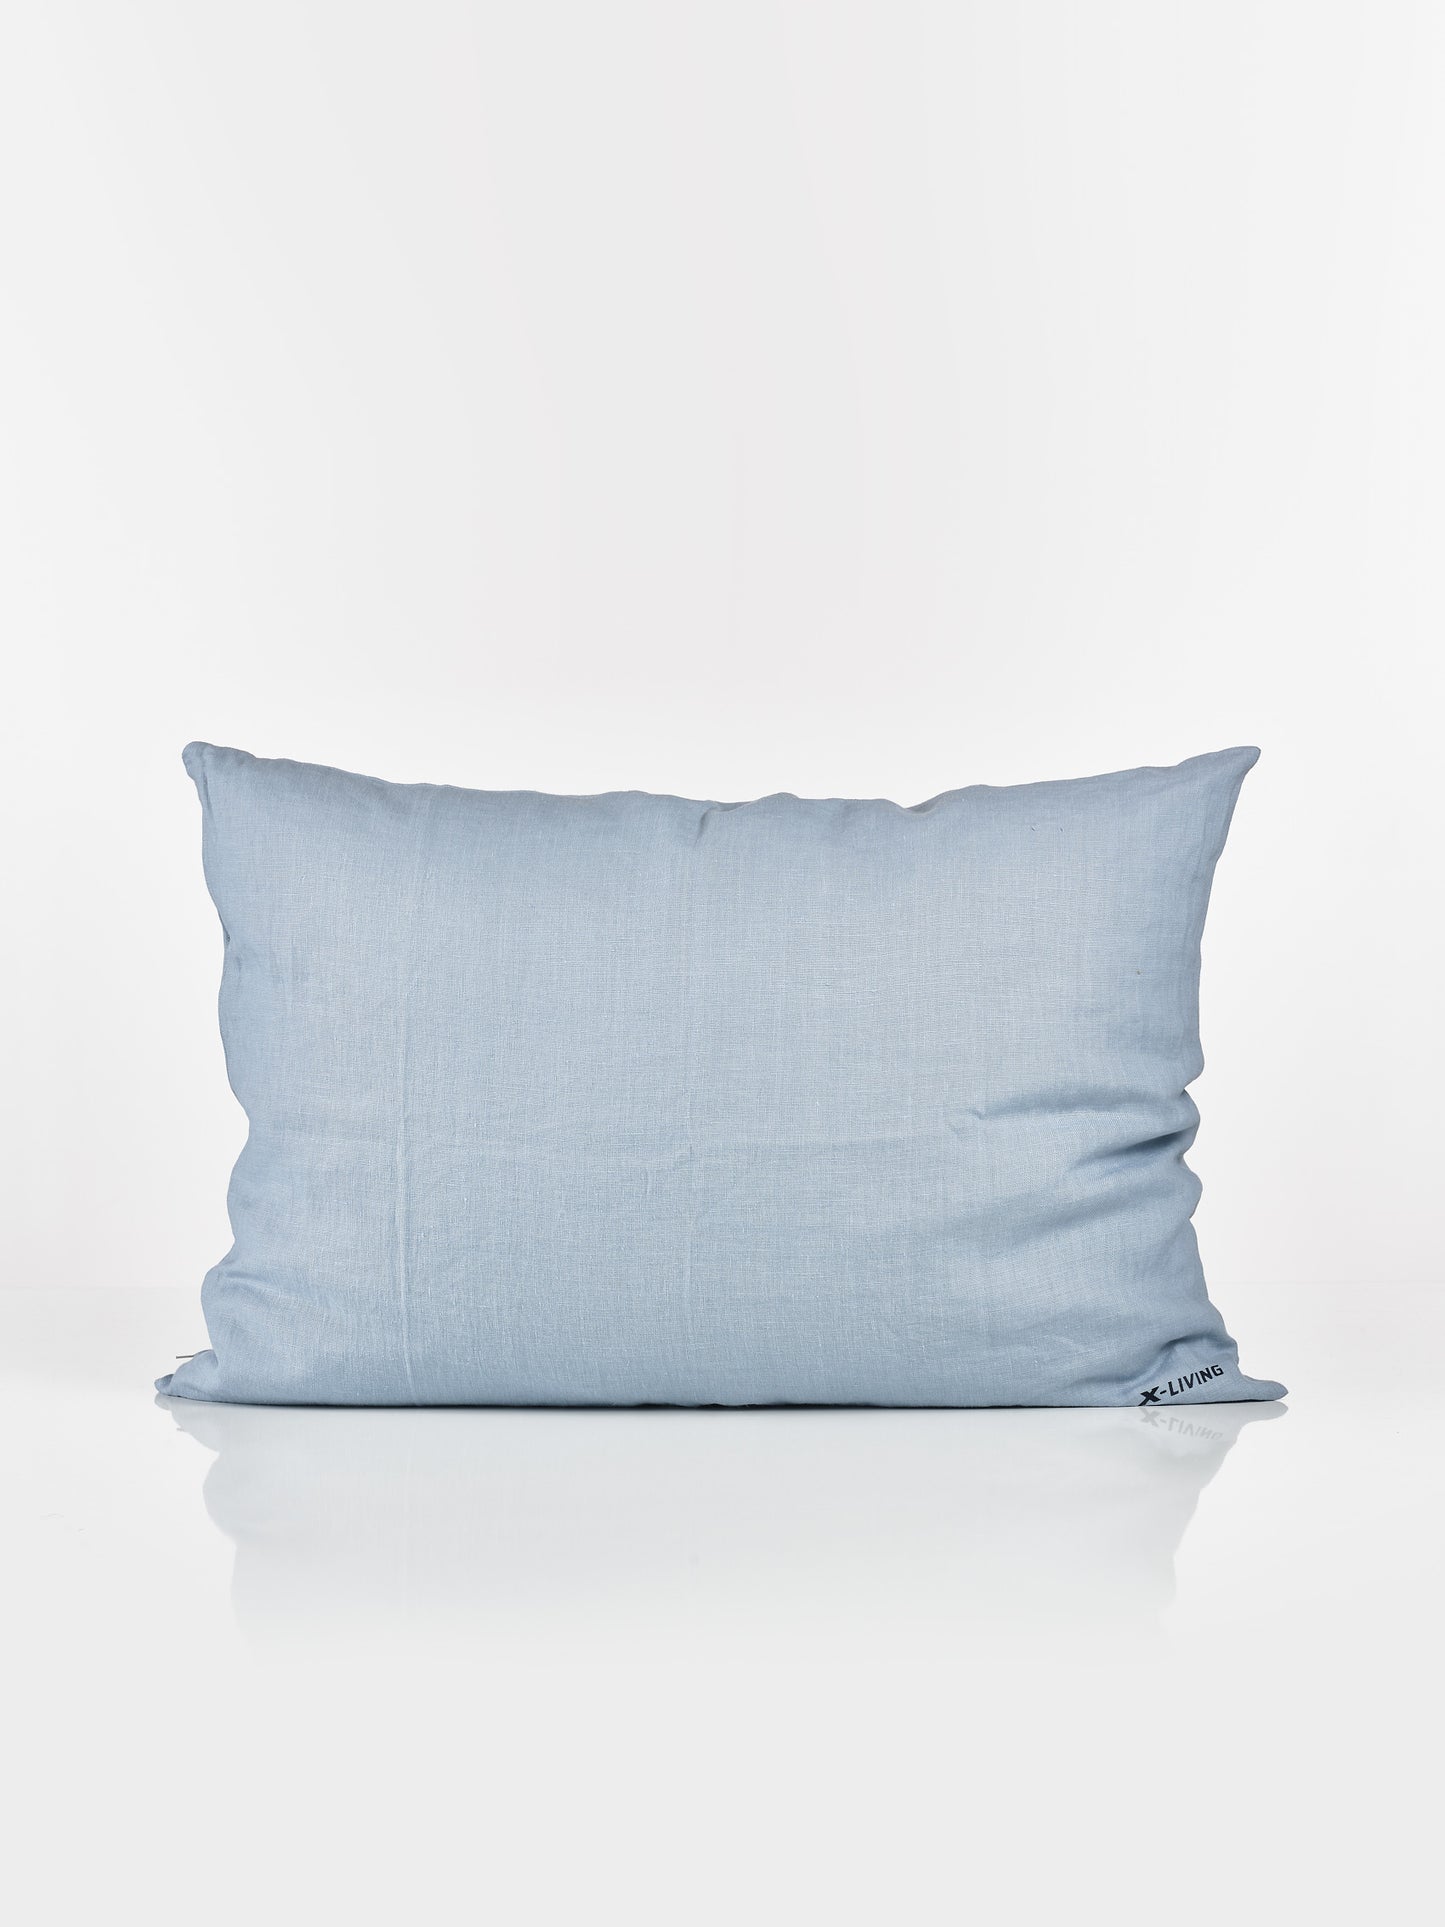 GUSTAV Headboard Fossflake pillow - Light Blue (50x70)